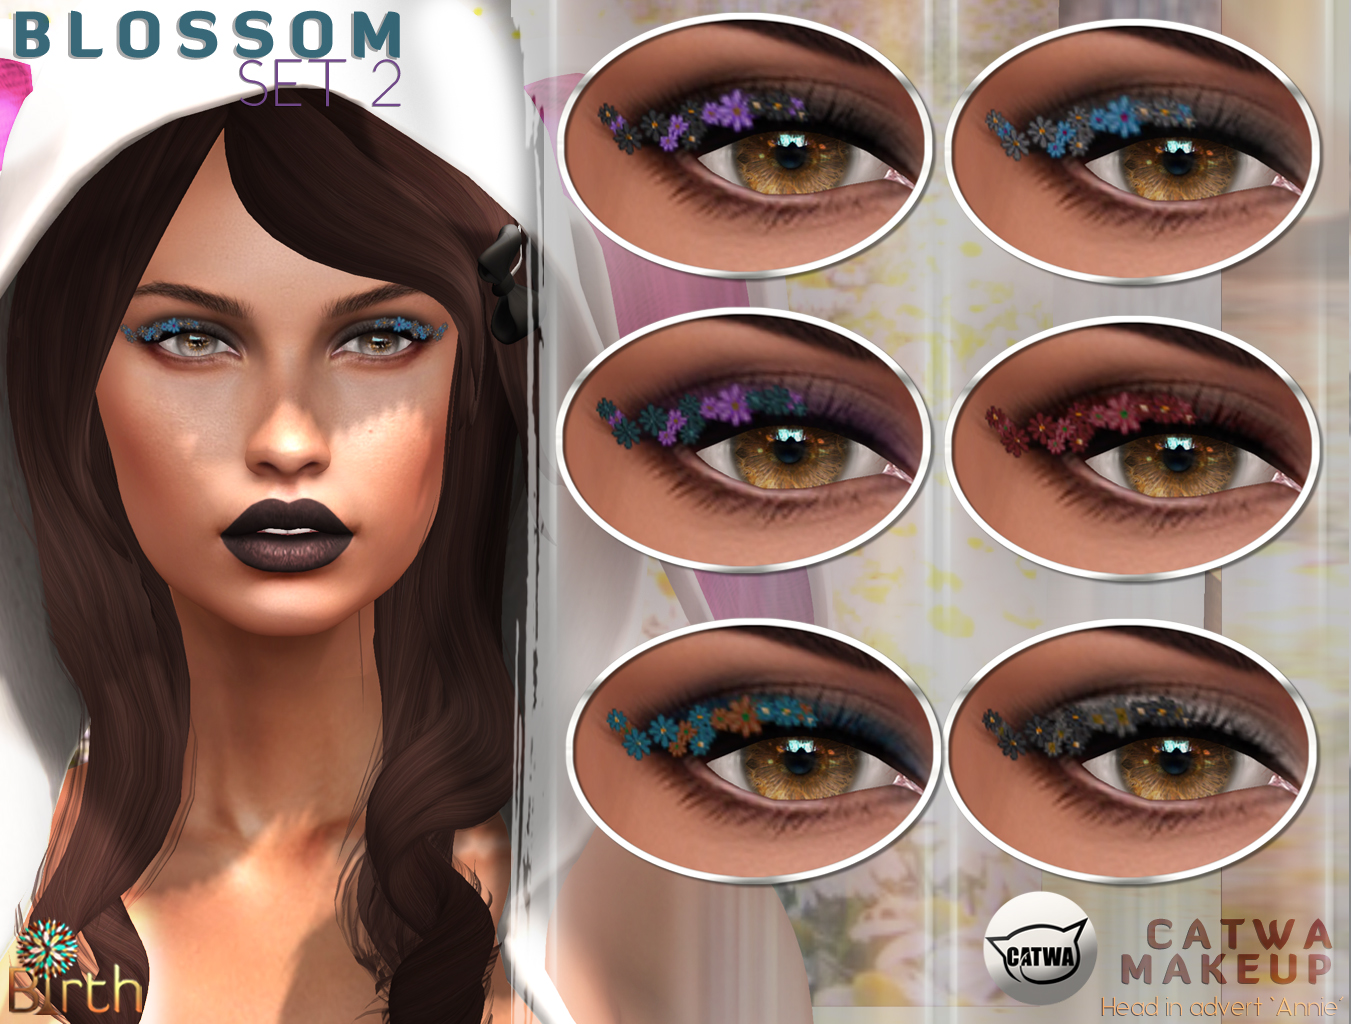 birth-blossom-eyeshadow-makeup-catwa-set-2